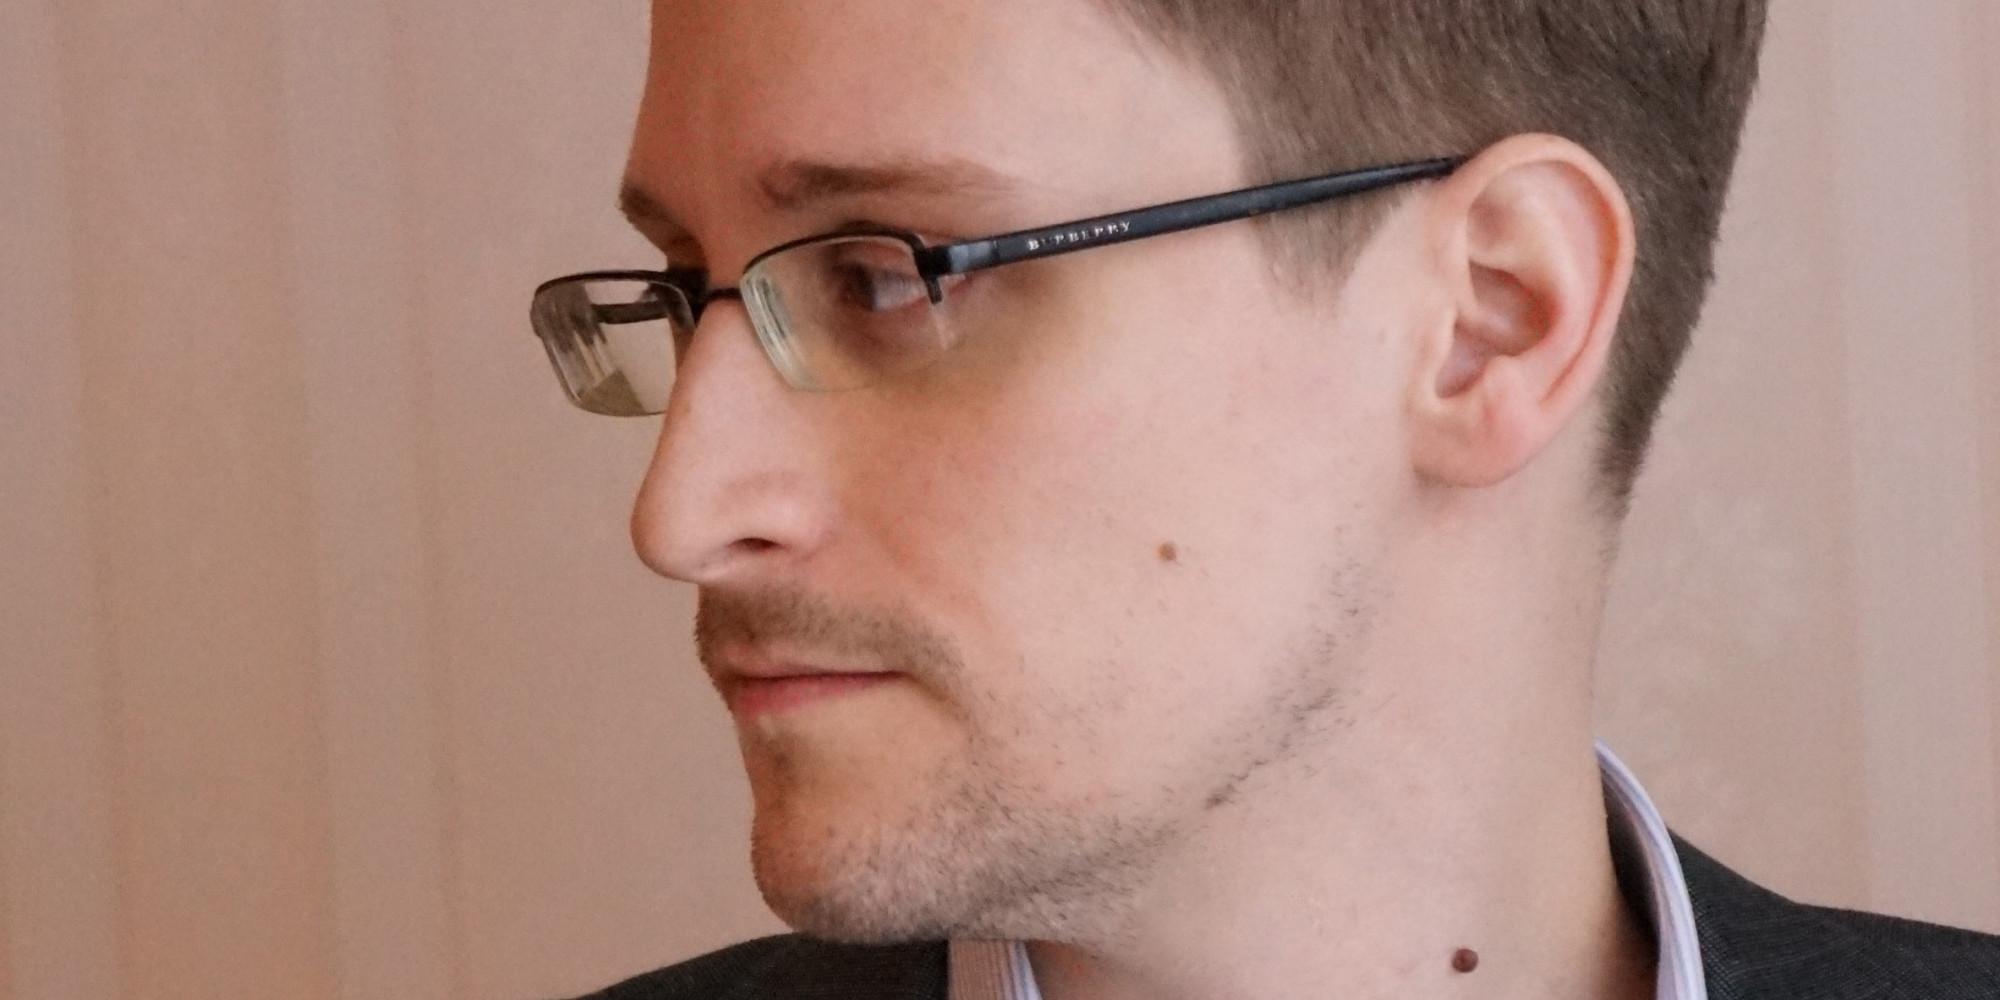 Edward Snowden Wallpaper and Background Imagex1000